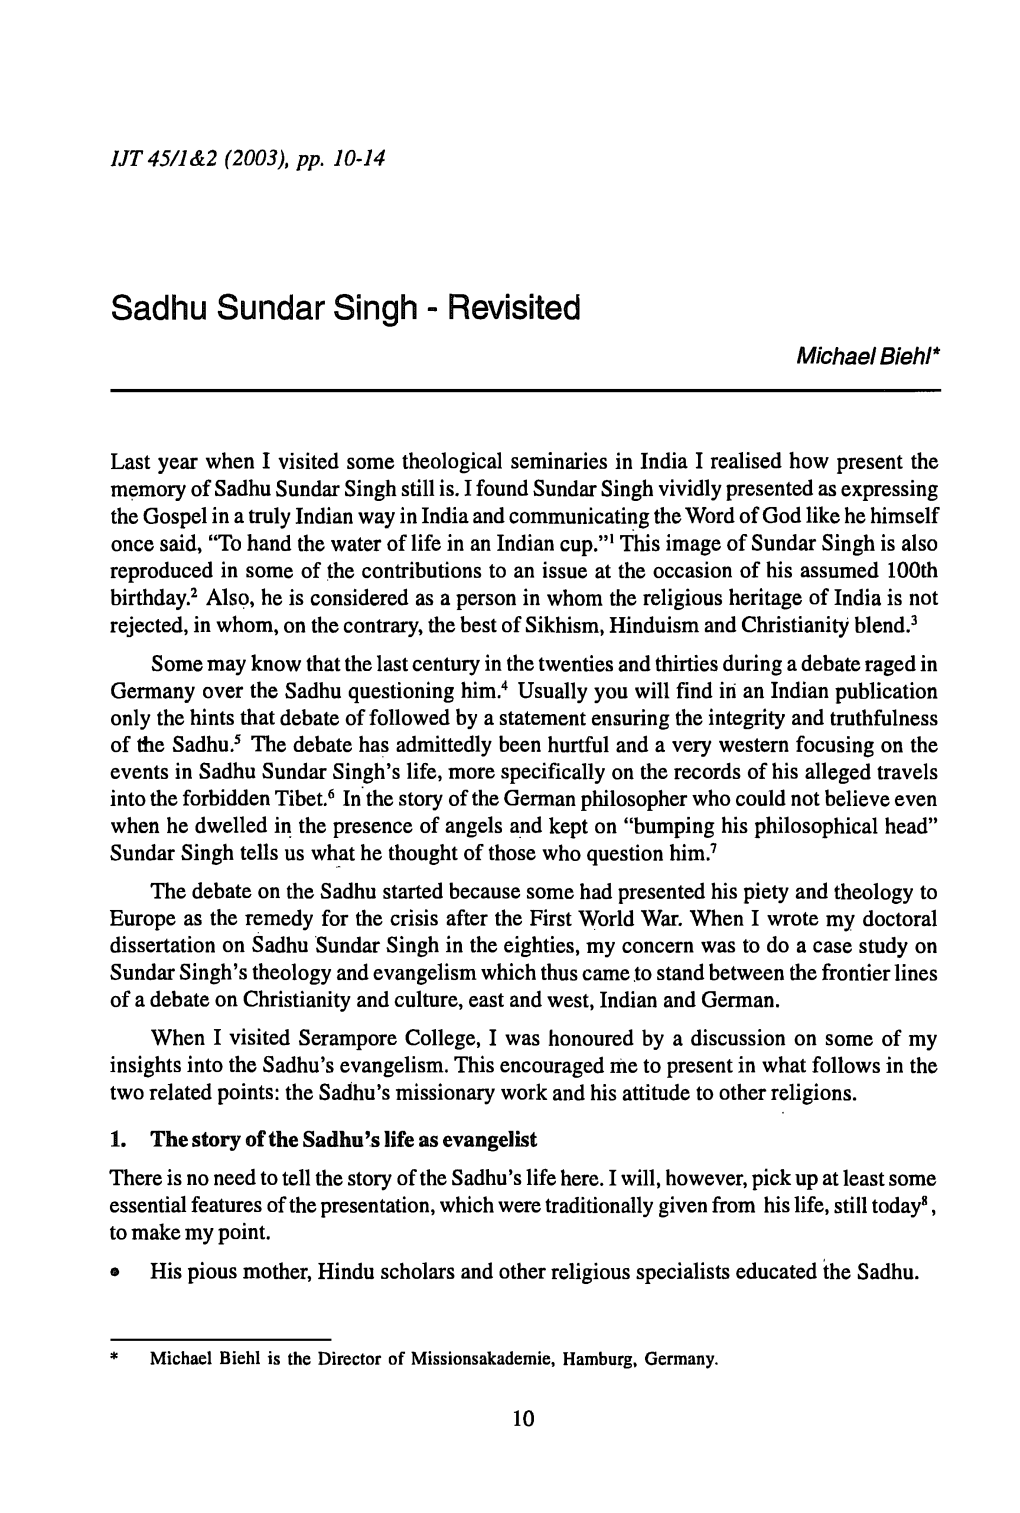 Sadhu Sundar Singh - Revisited Michael Biehl*